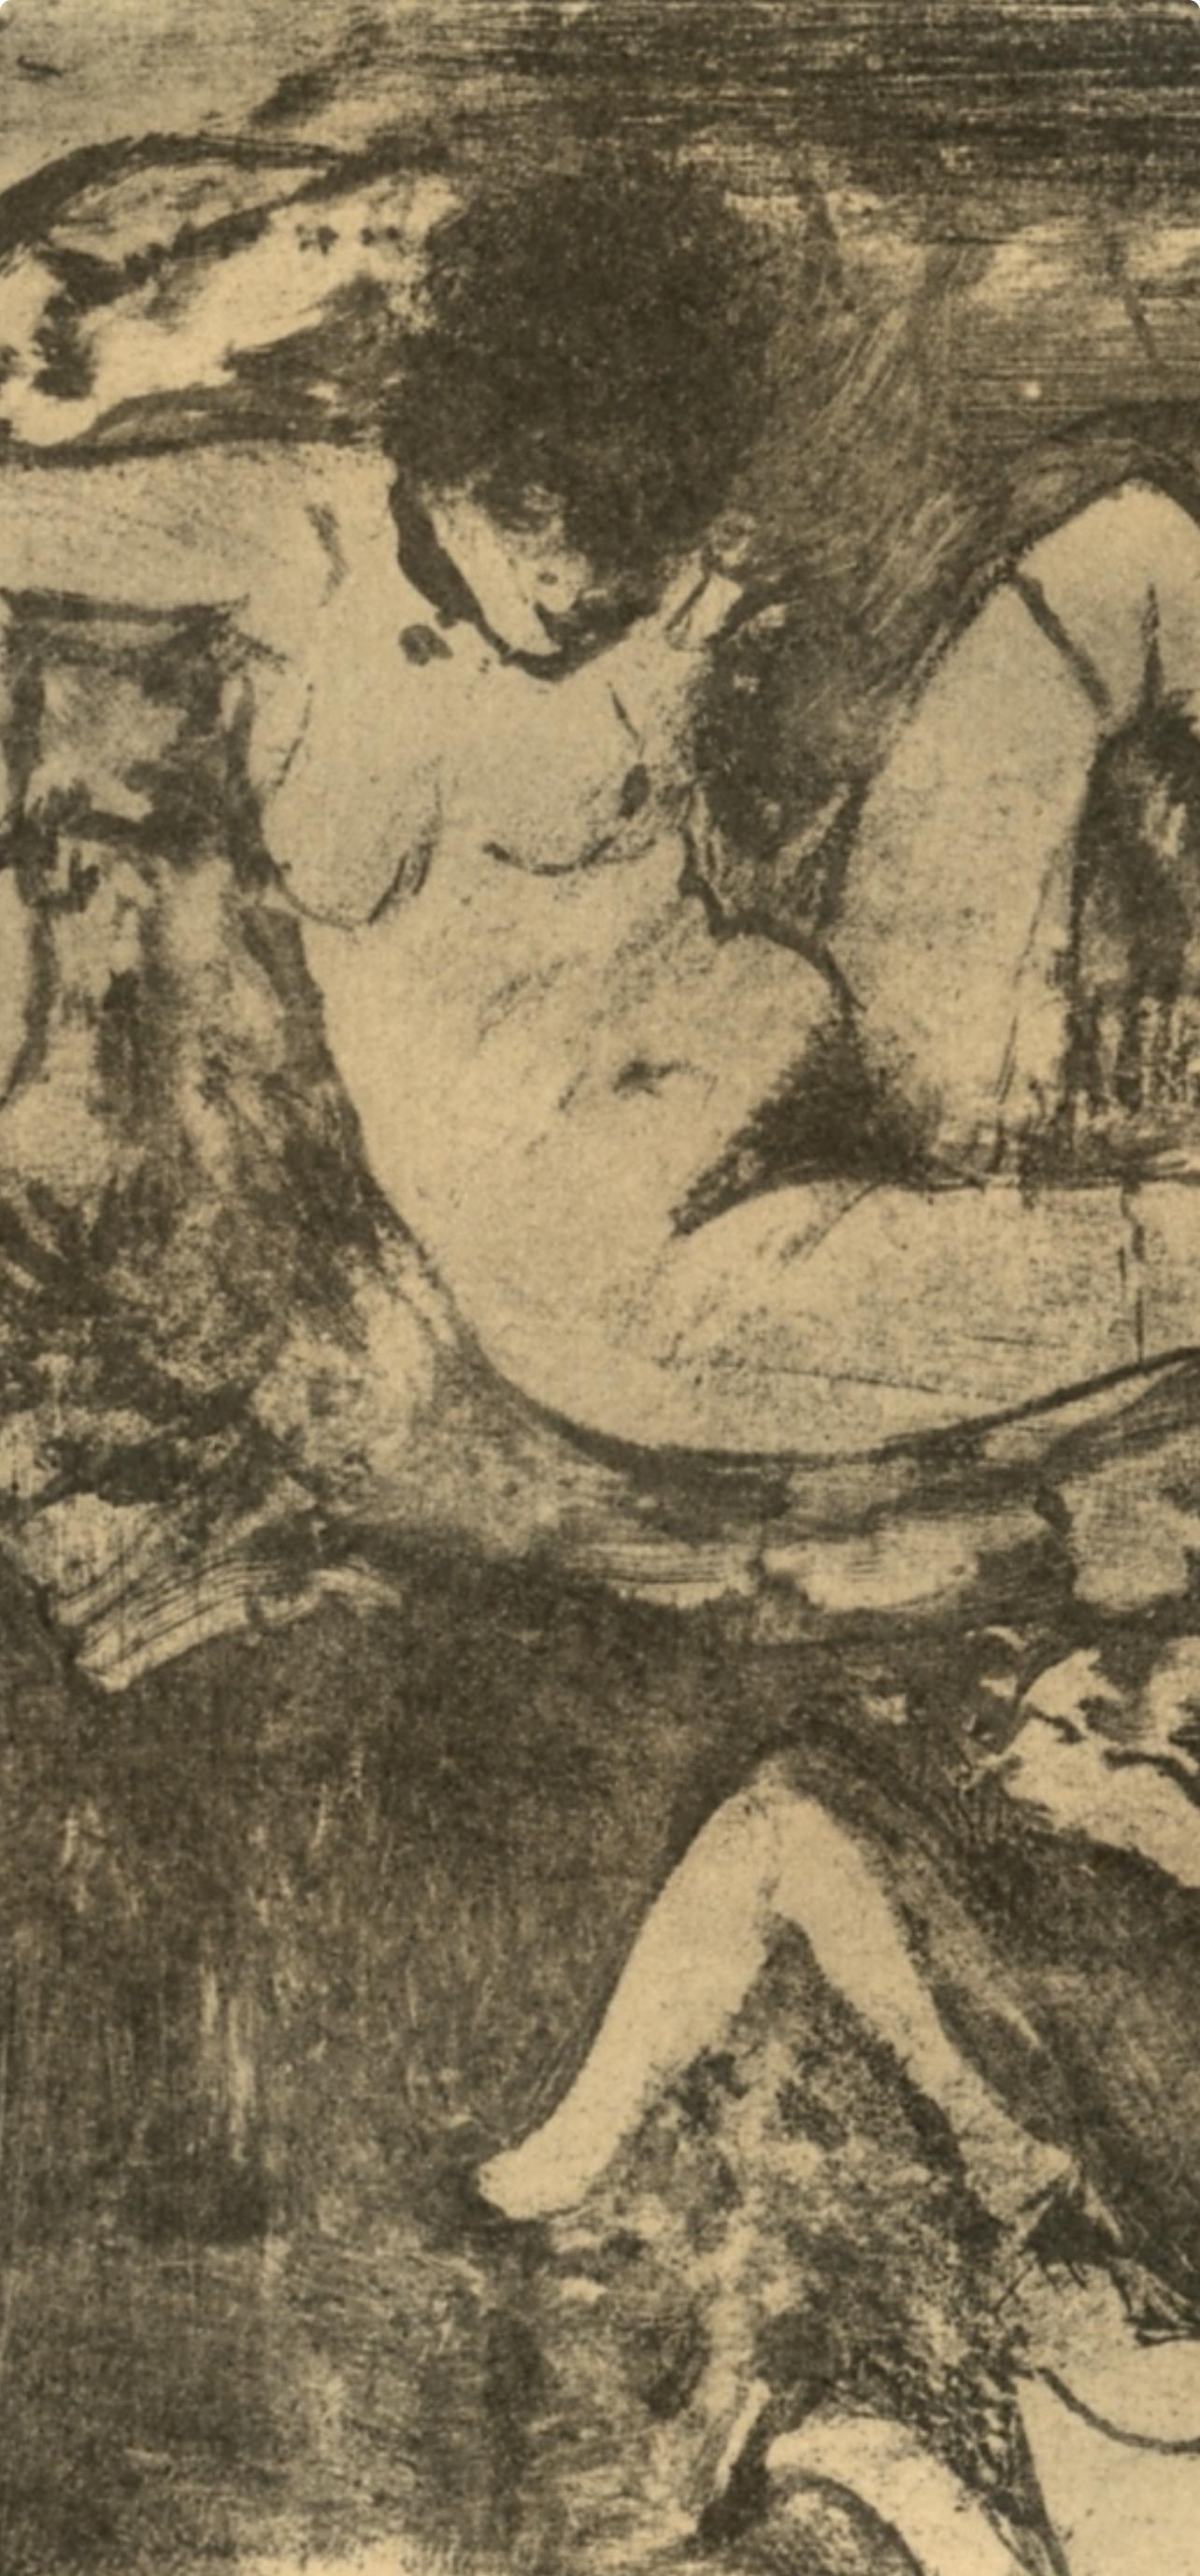 Degas, Les Femmes, Les Monotypes (after) - Print by Edgar Degas